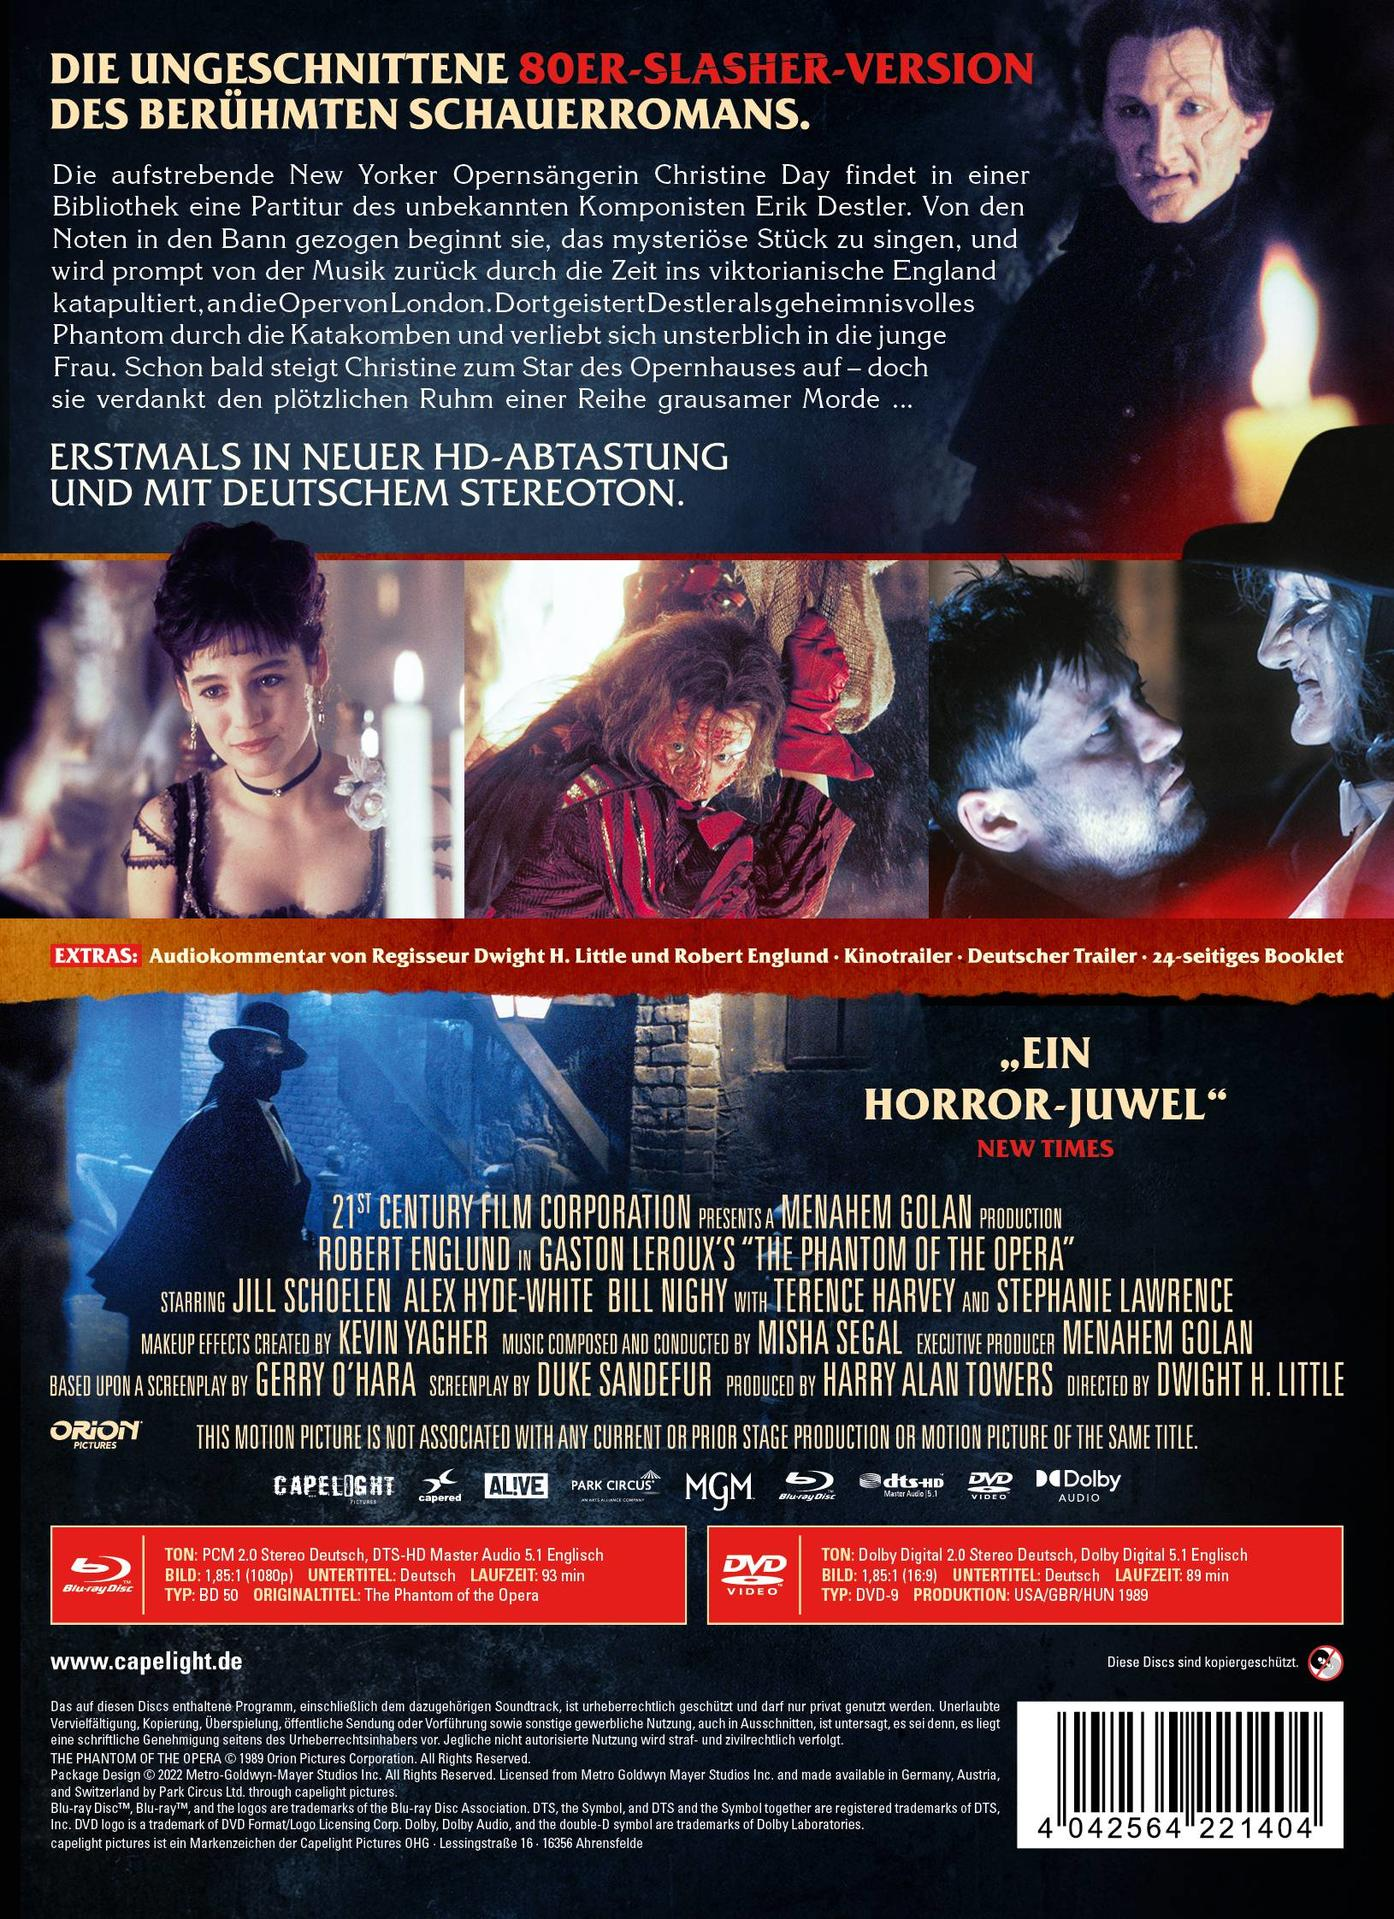 the Blu-ray Opera + DVD Phantom of